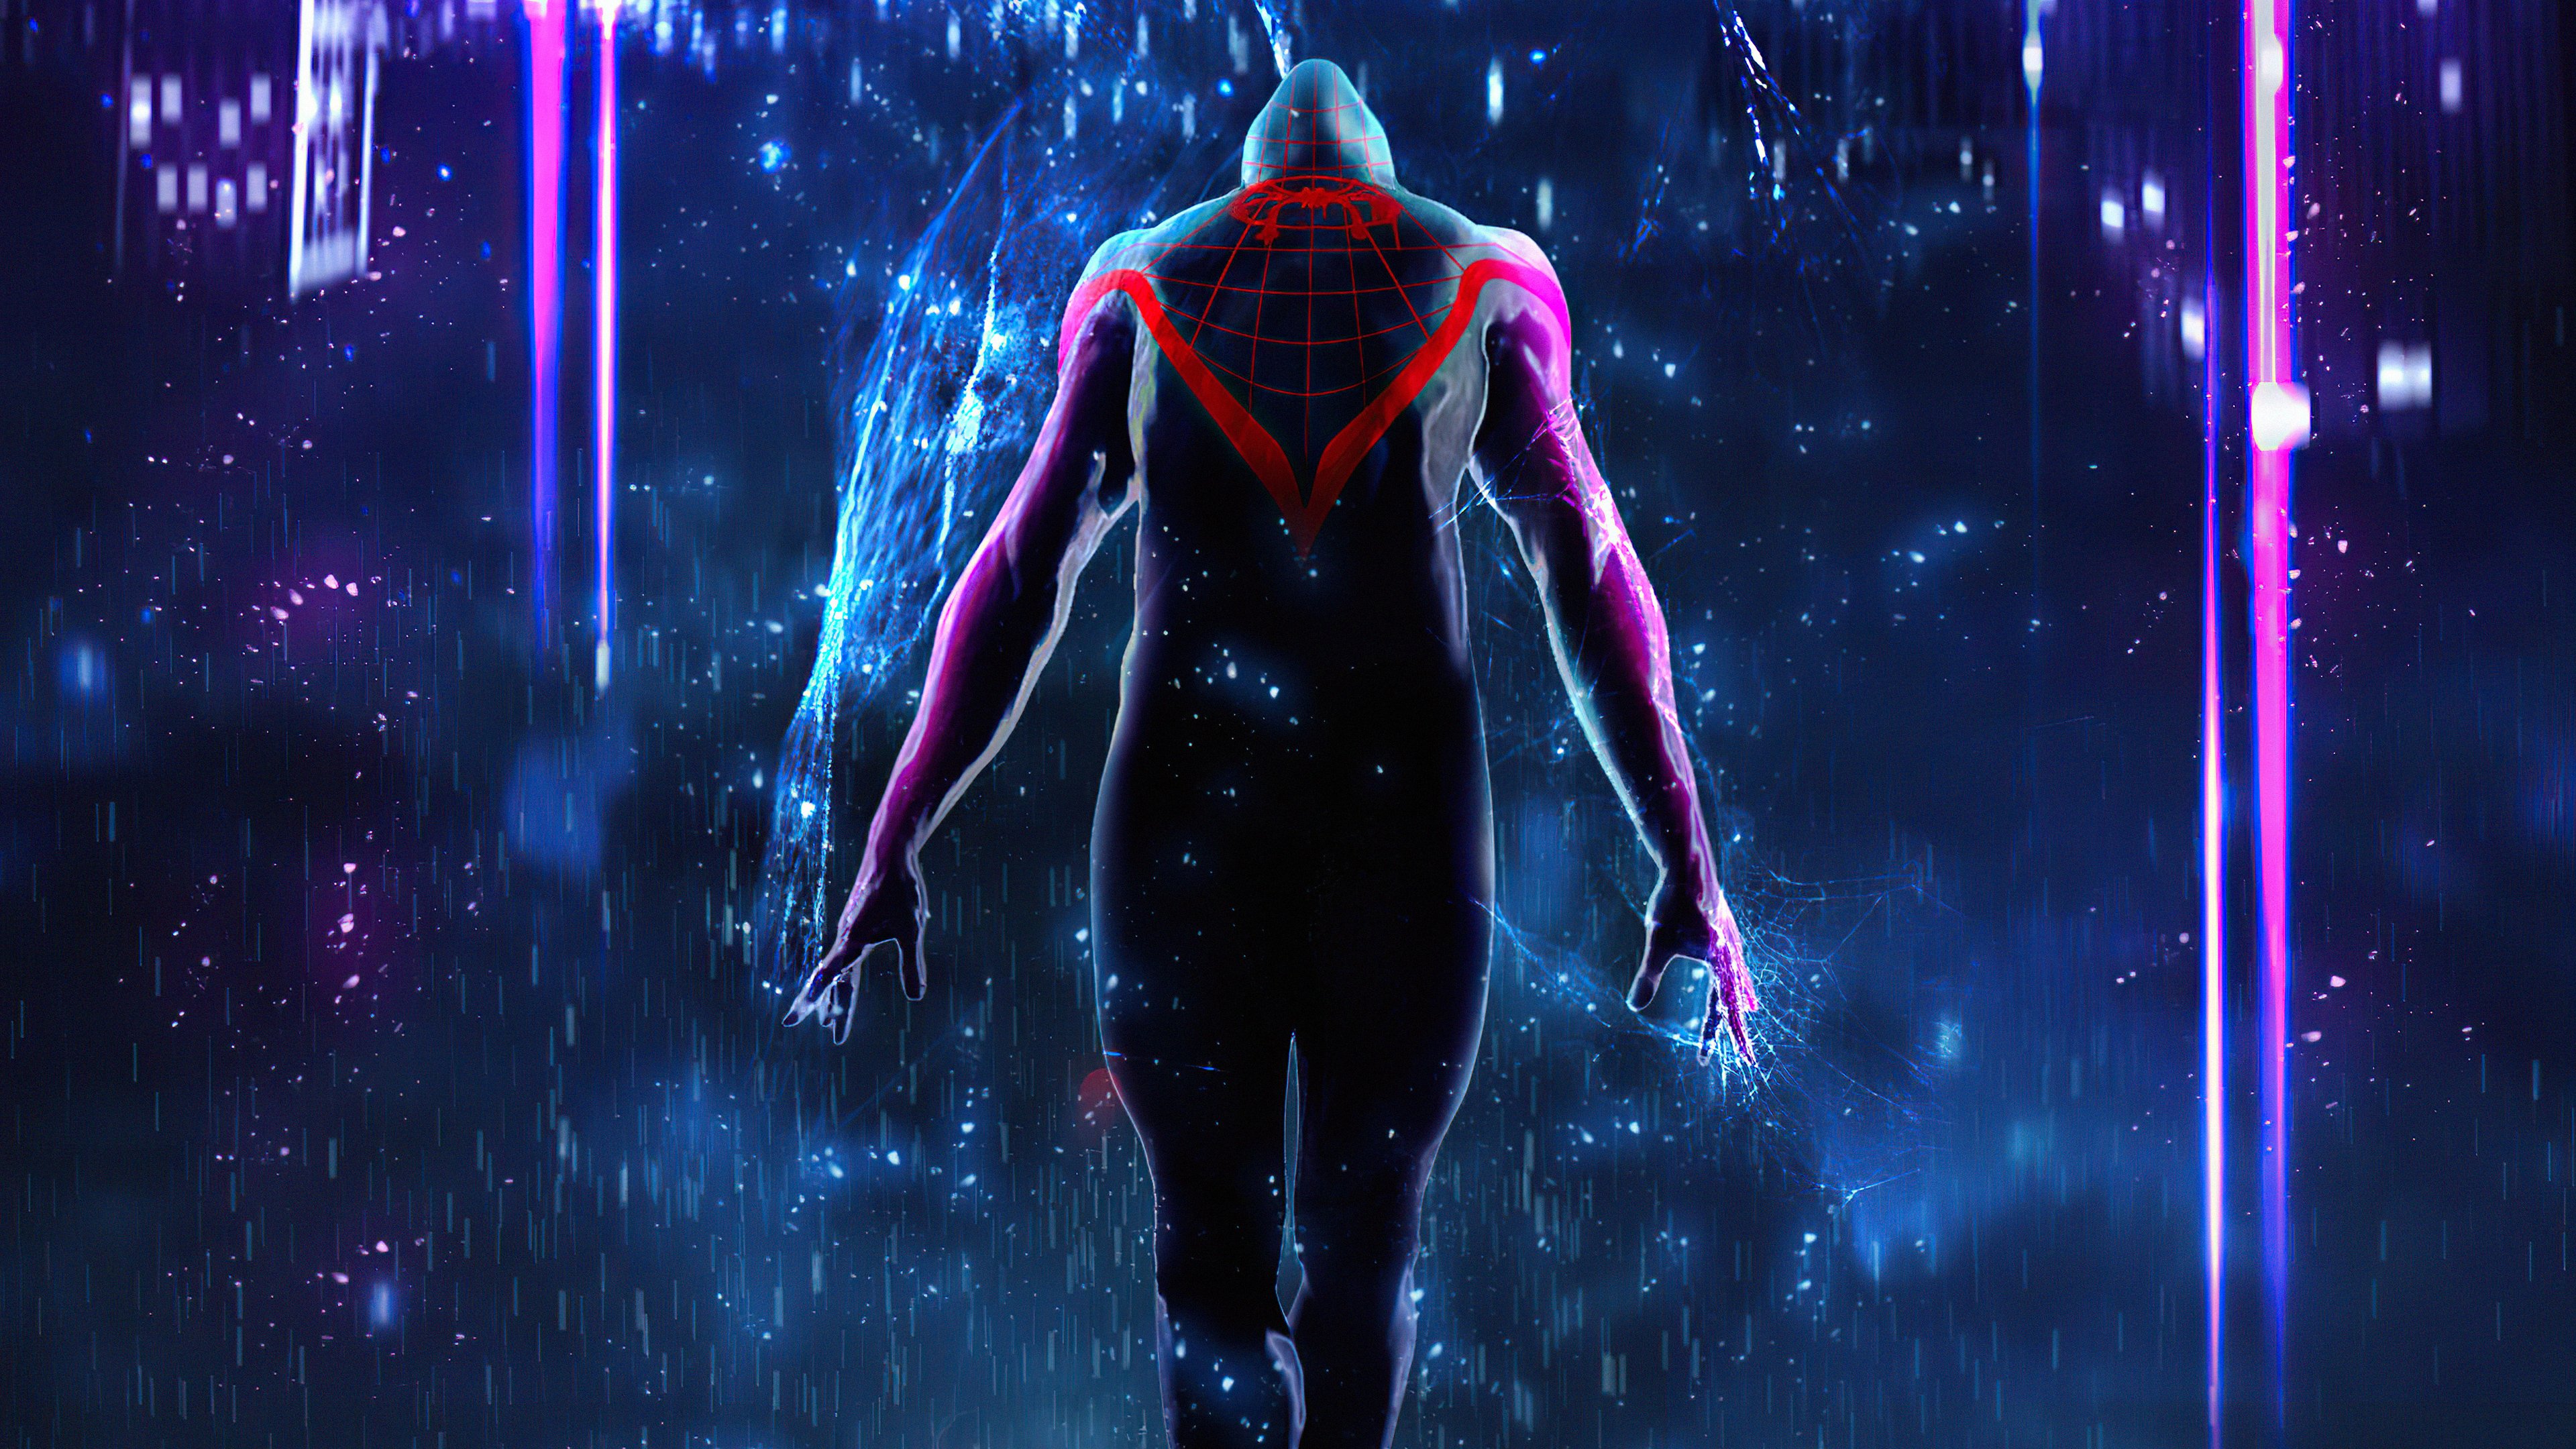 Wallpaper Spider Man Into the Spider Verse